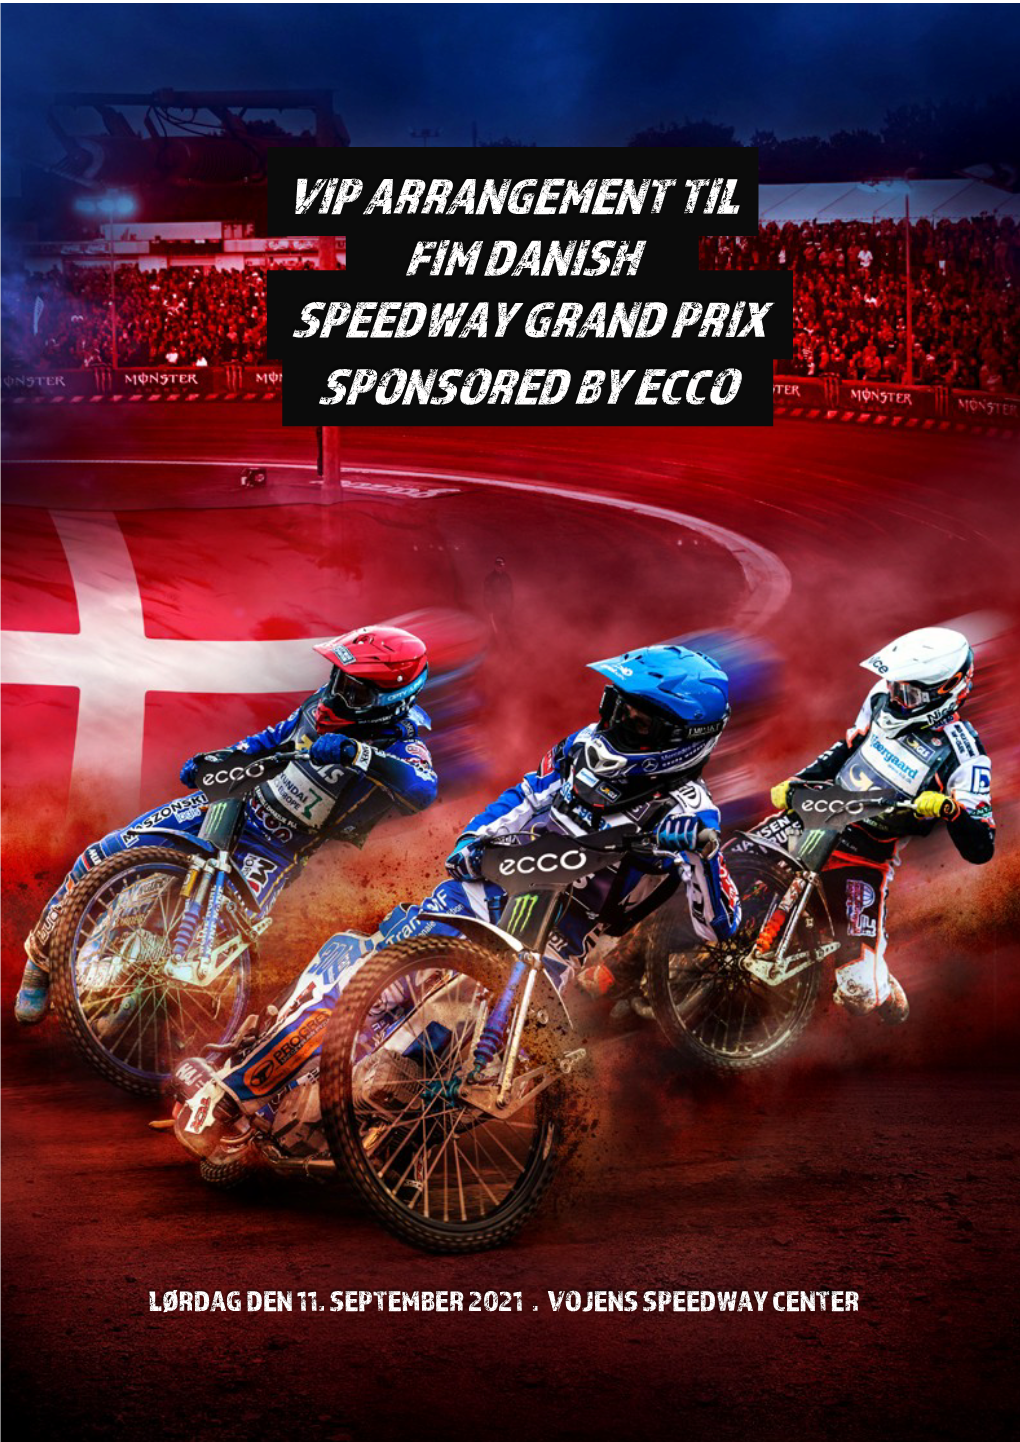 Sponsored by Ecco Speedway Grand Prix Fim Danish Vip Arrangement